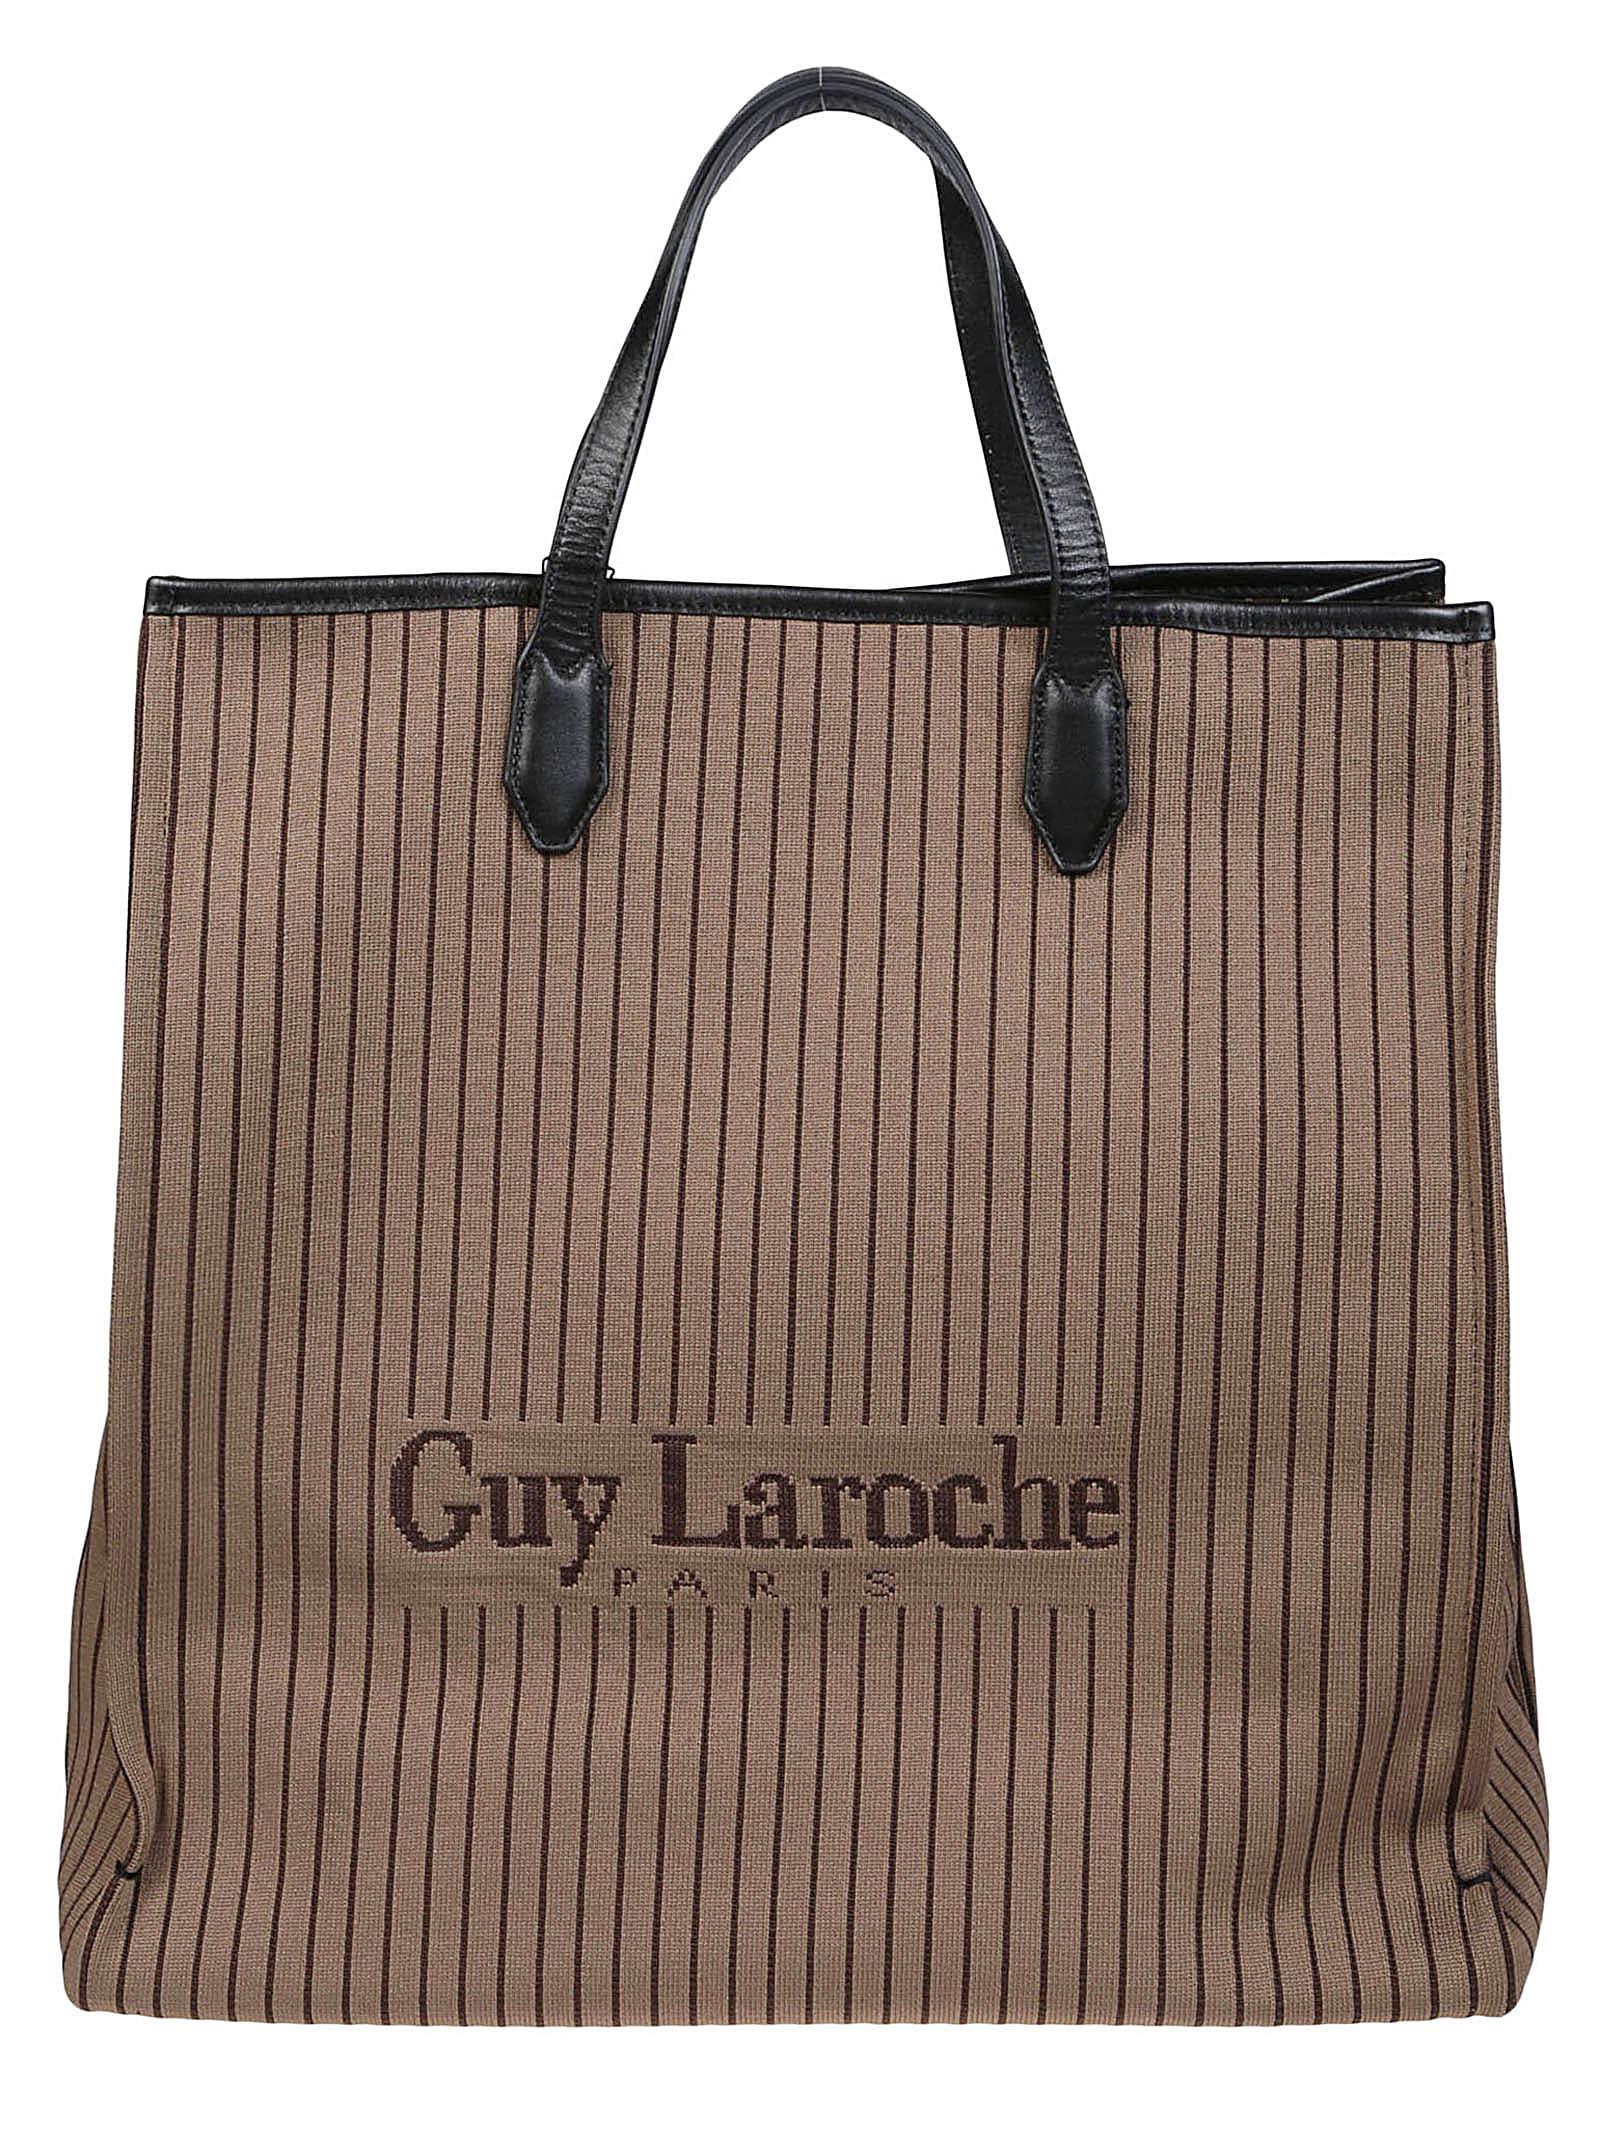 guy laroche bag